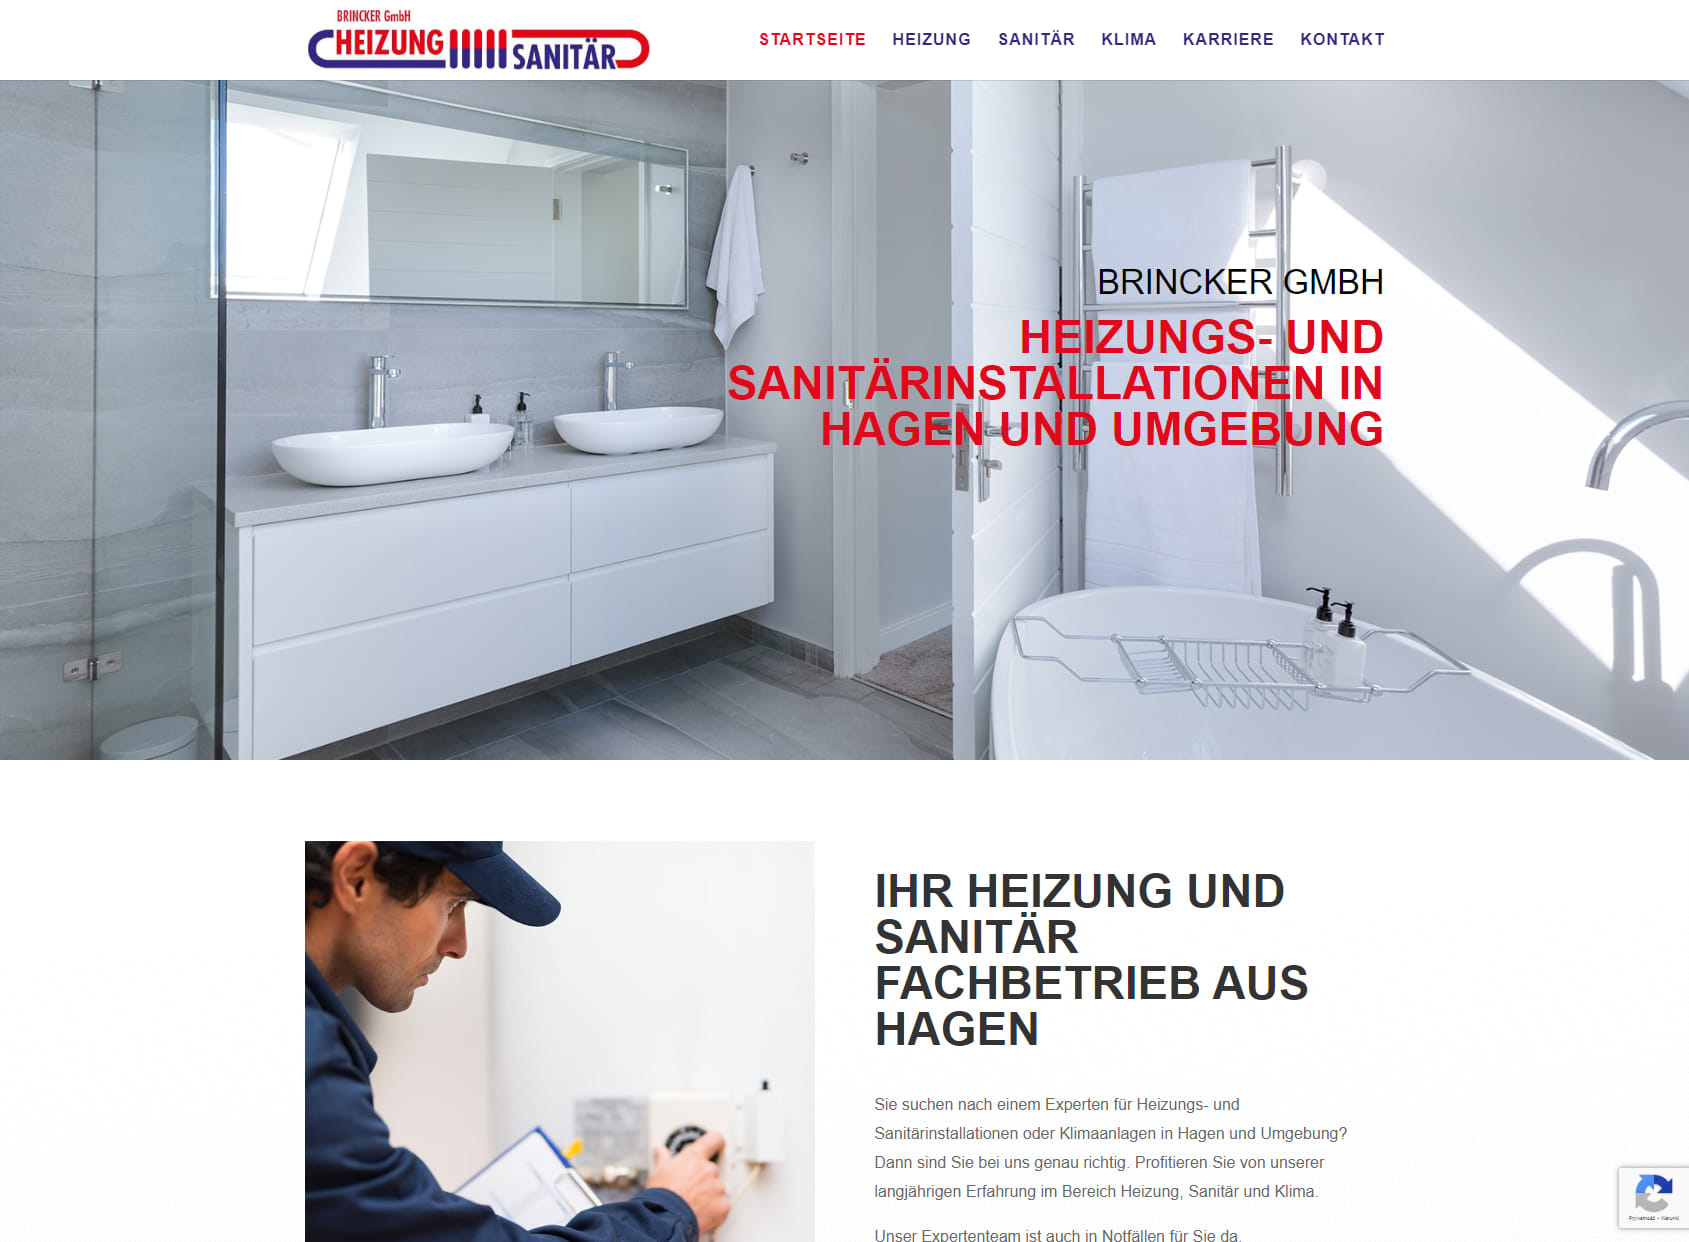 Heizung-Sanitär Brincker GmbH